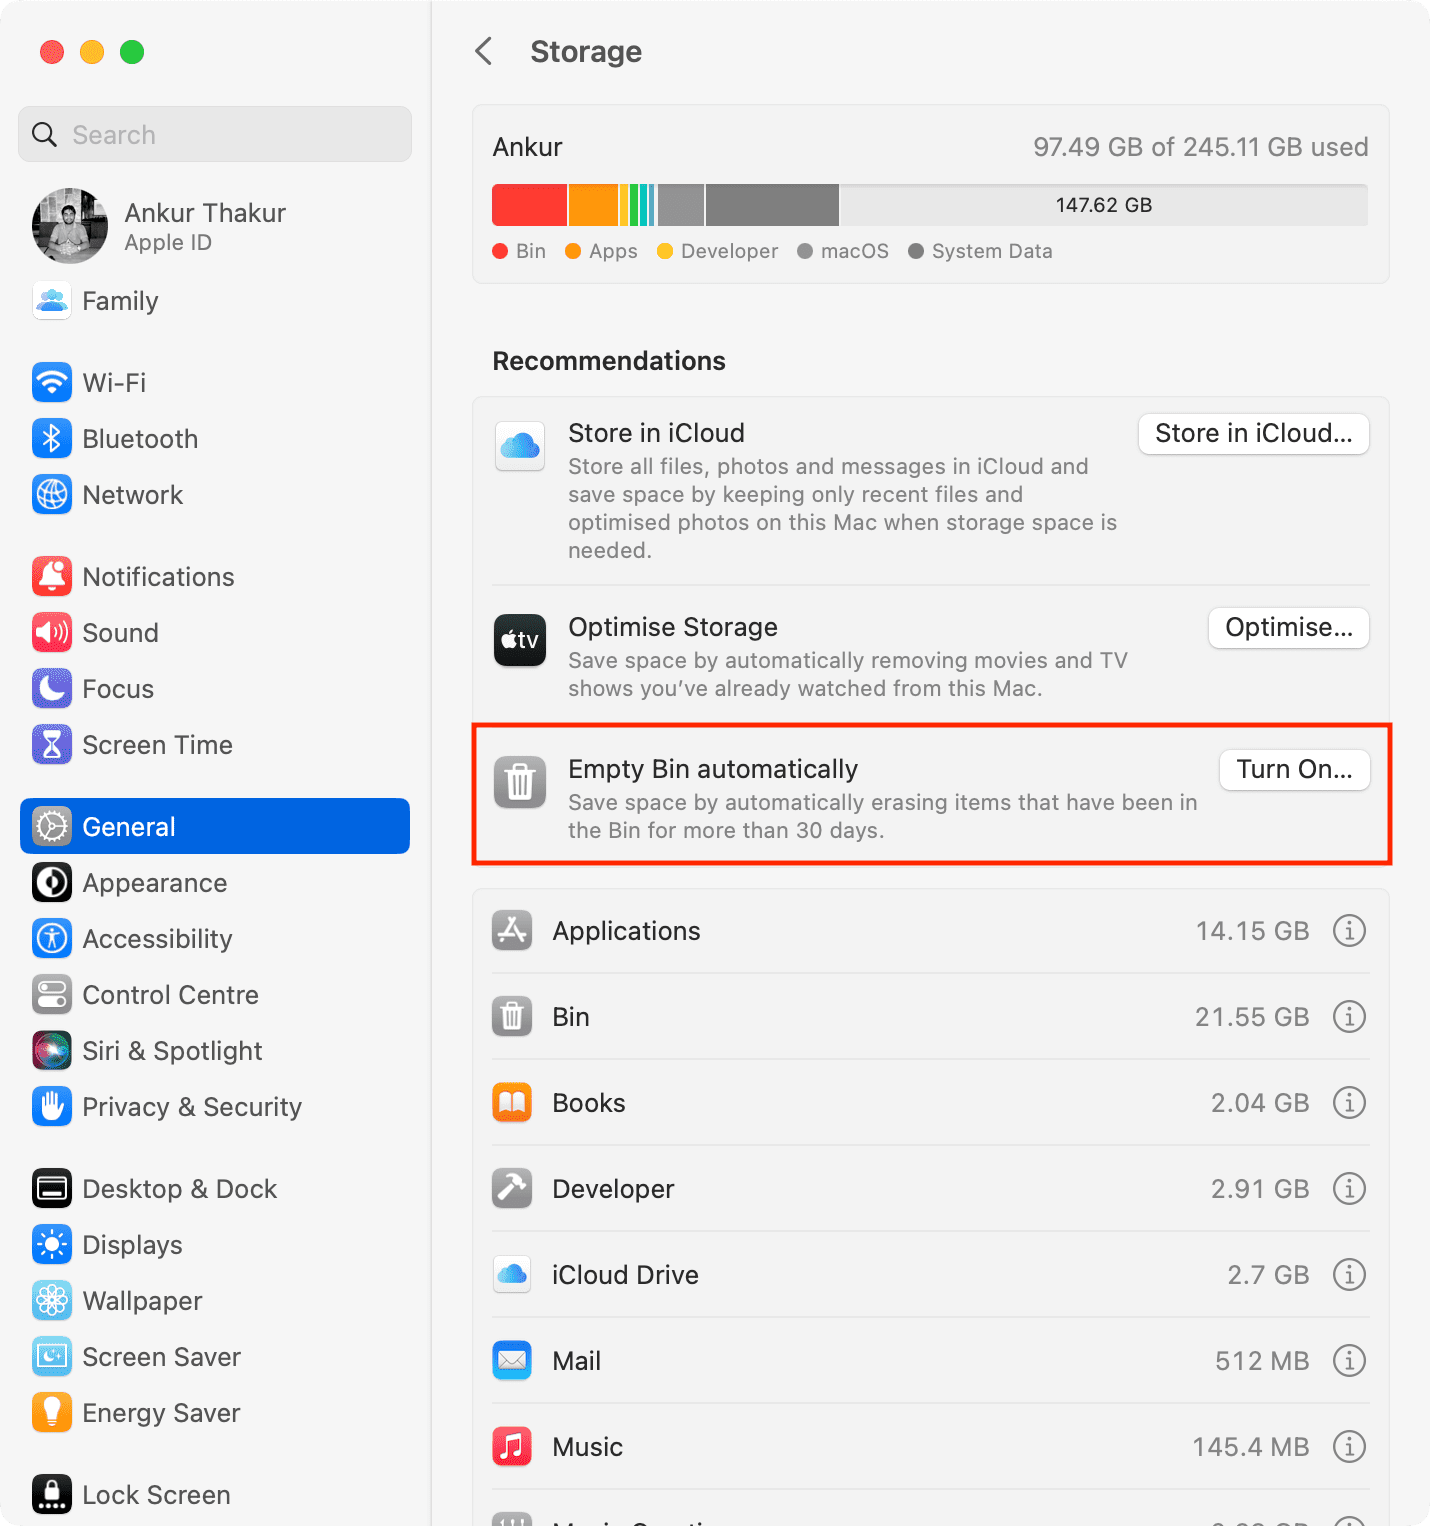 Turn on a setting to empty Bin automatically on Mac